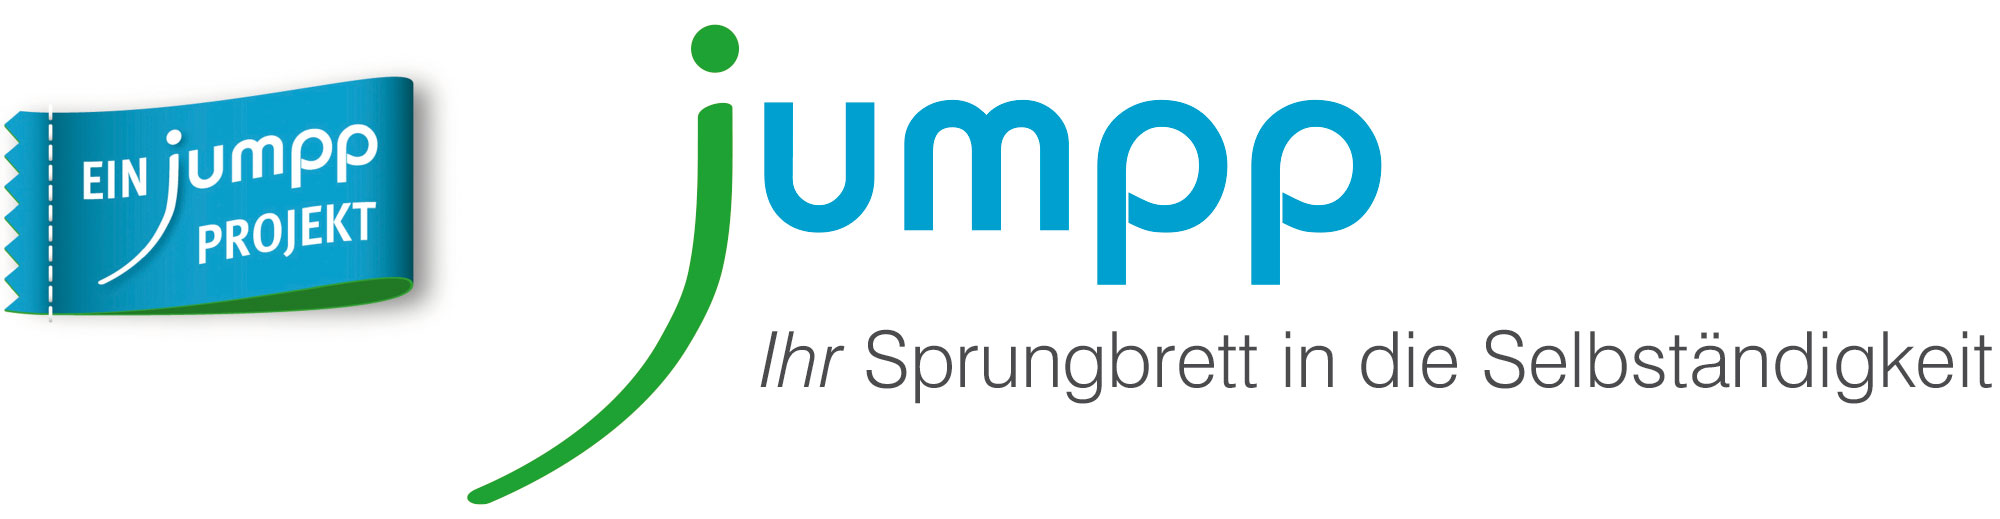 Jumpp +Projekt